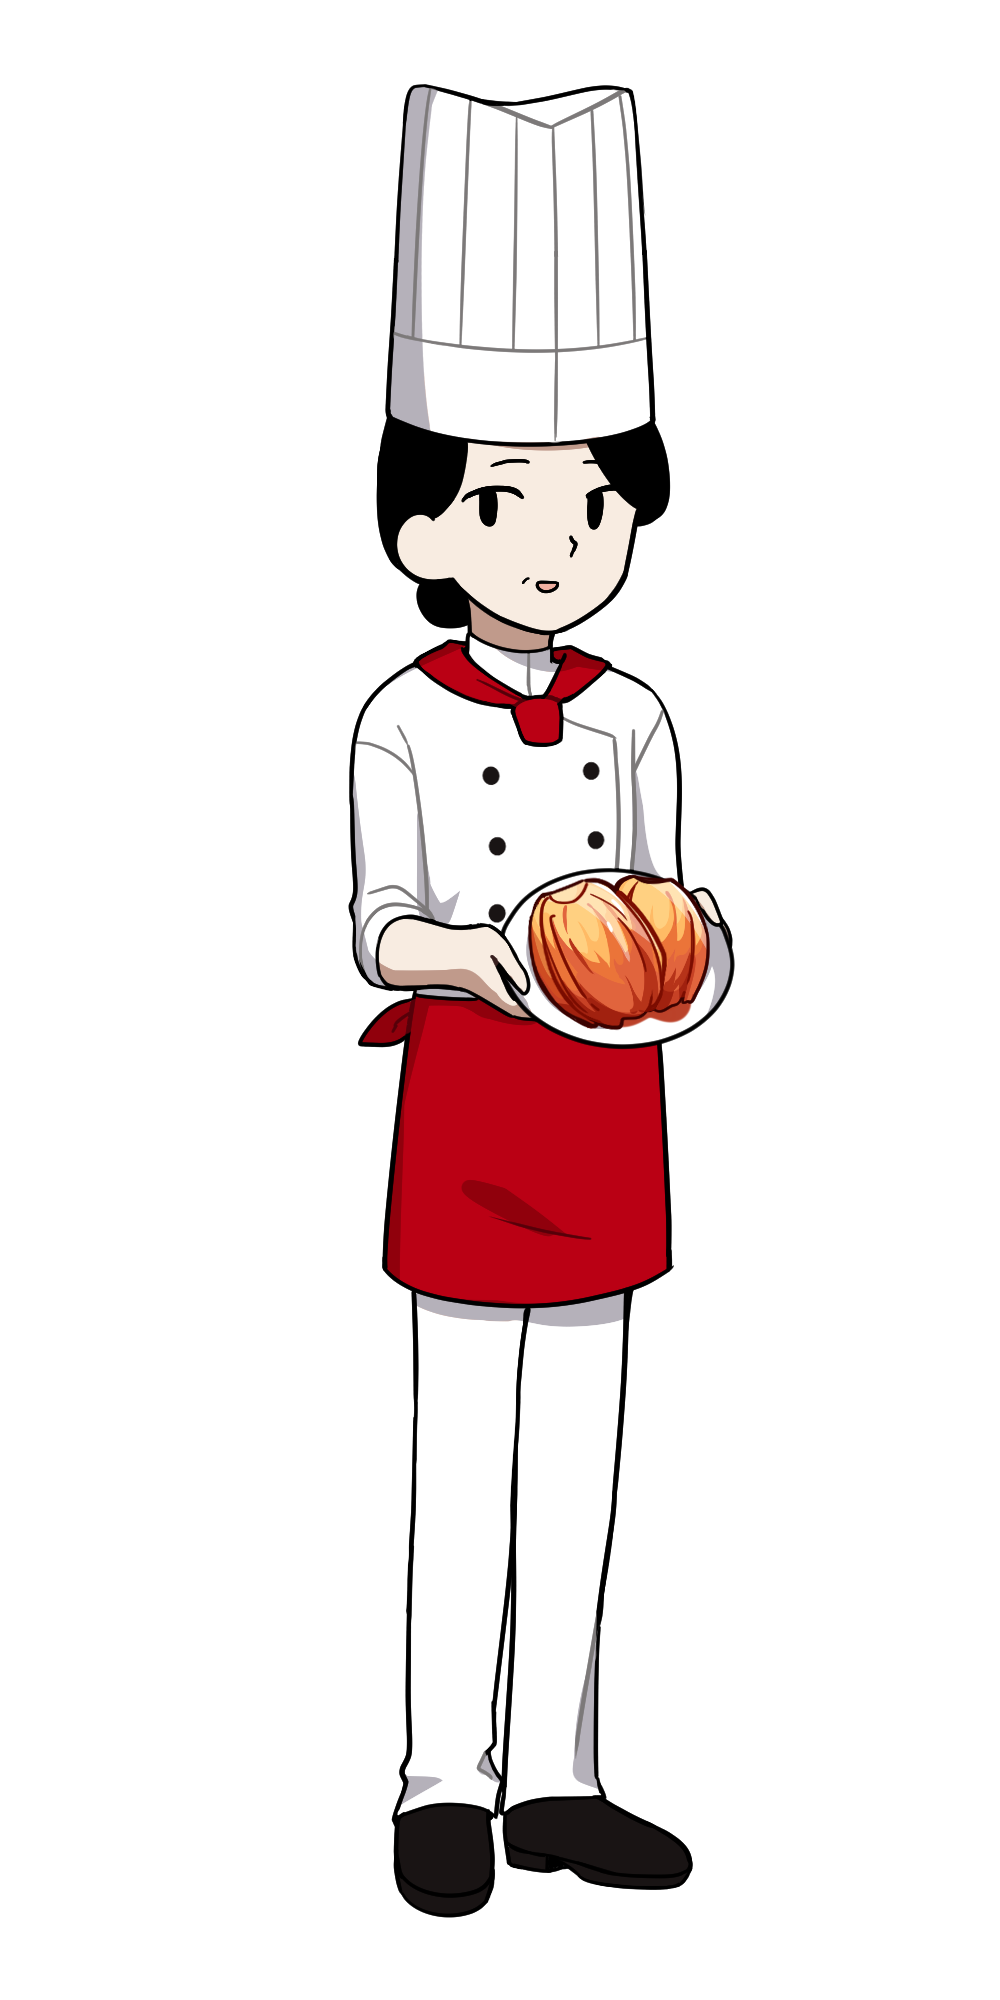 chef character with kimchi